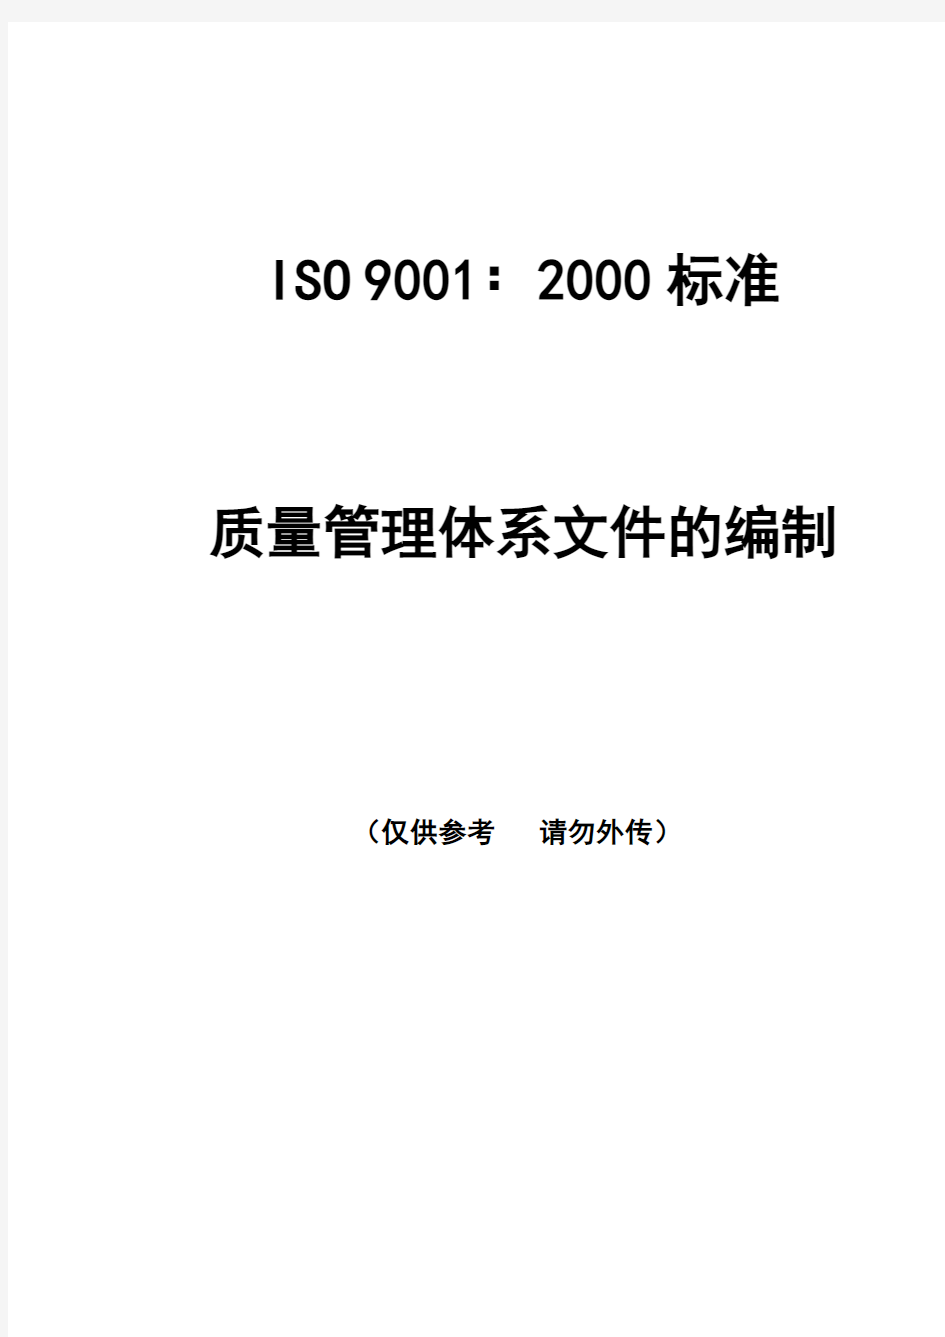 ISO9001：2000标准质量管理体系文件的编